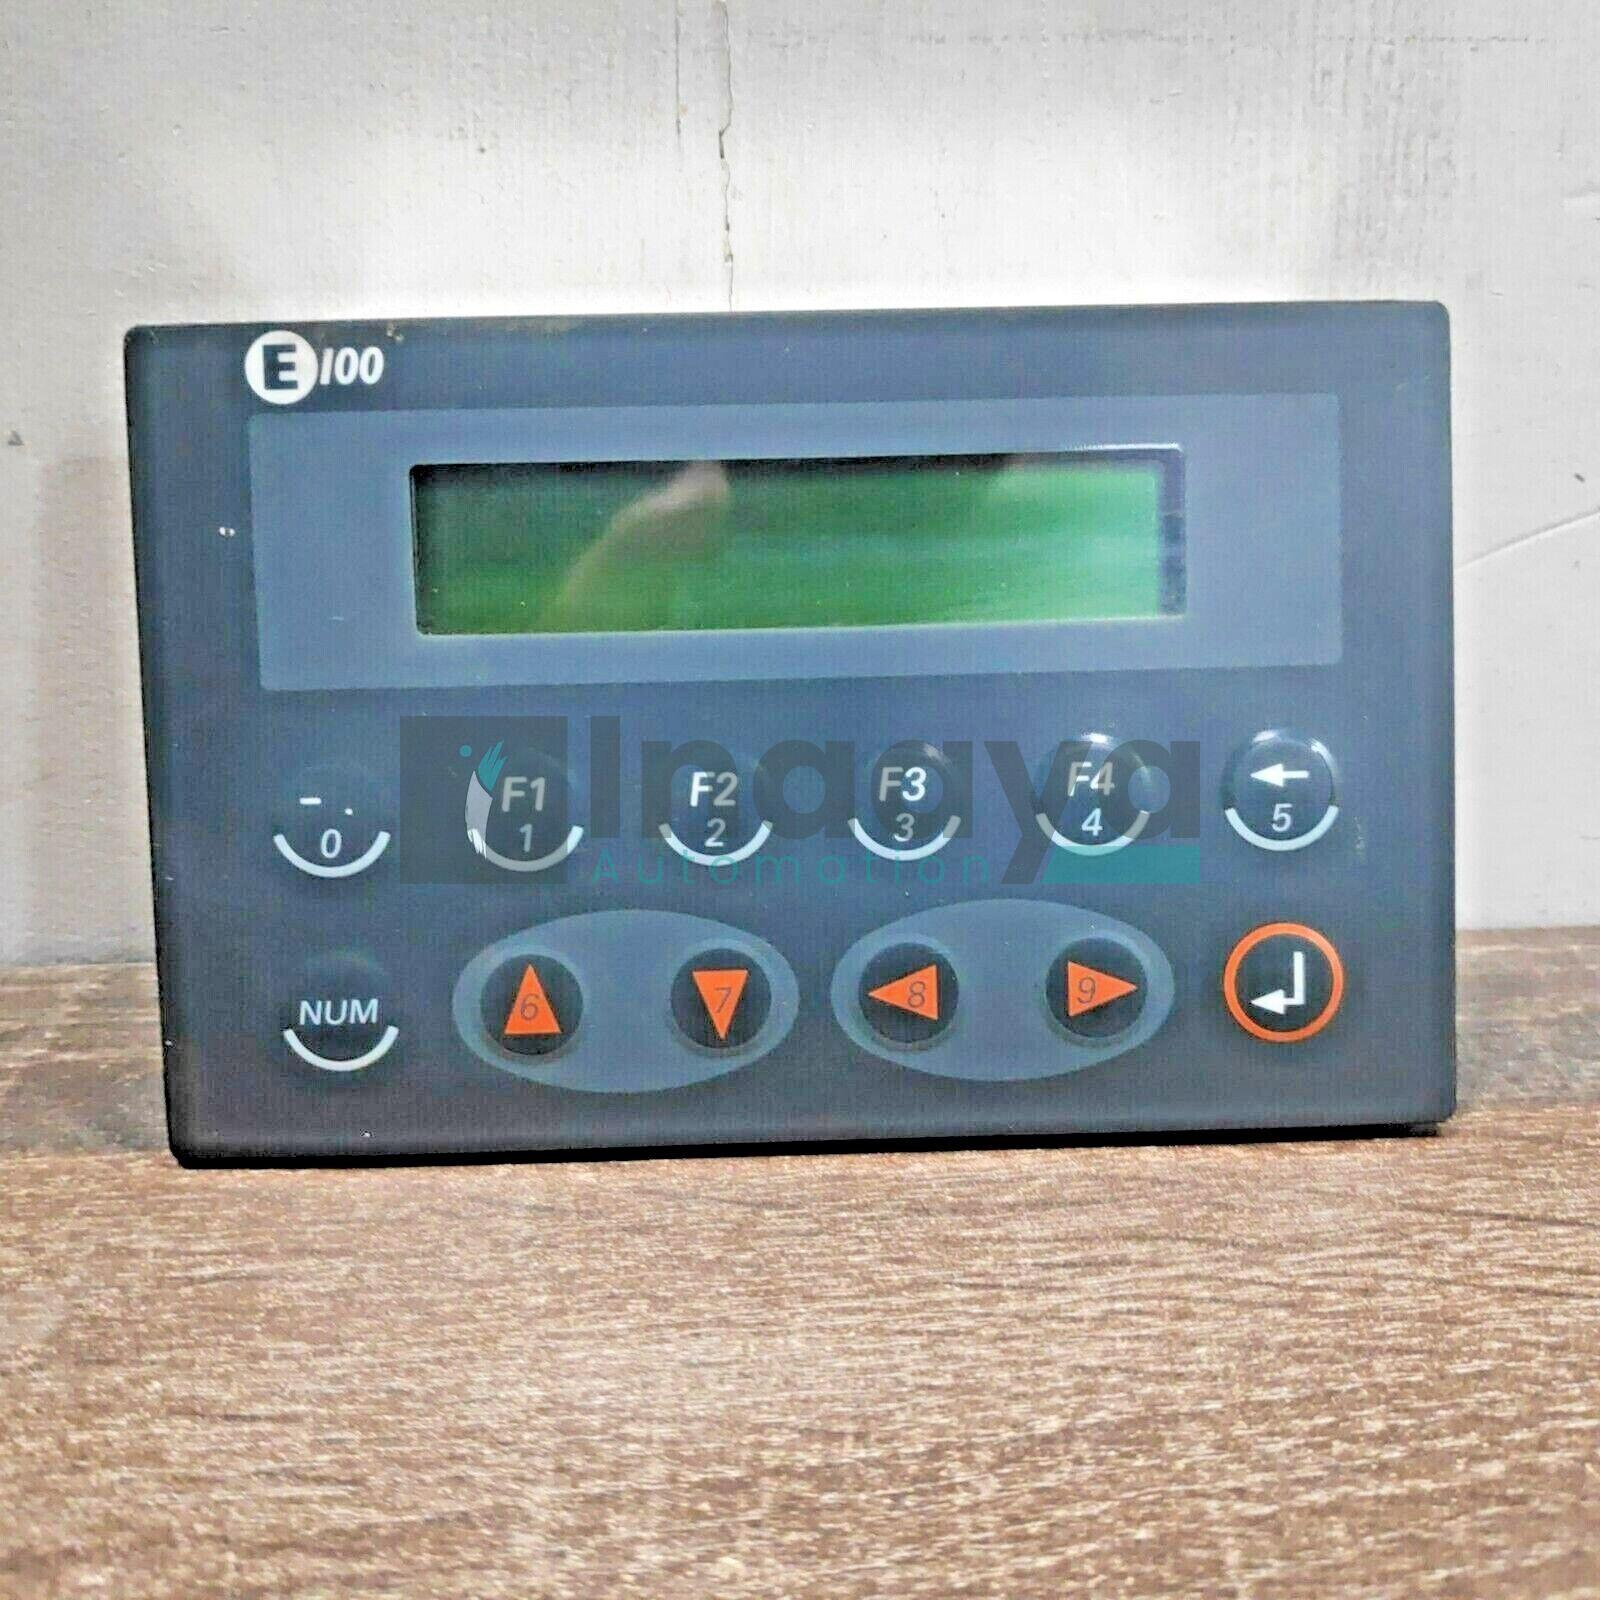 BEIJER ELECTRONICS E100